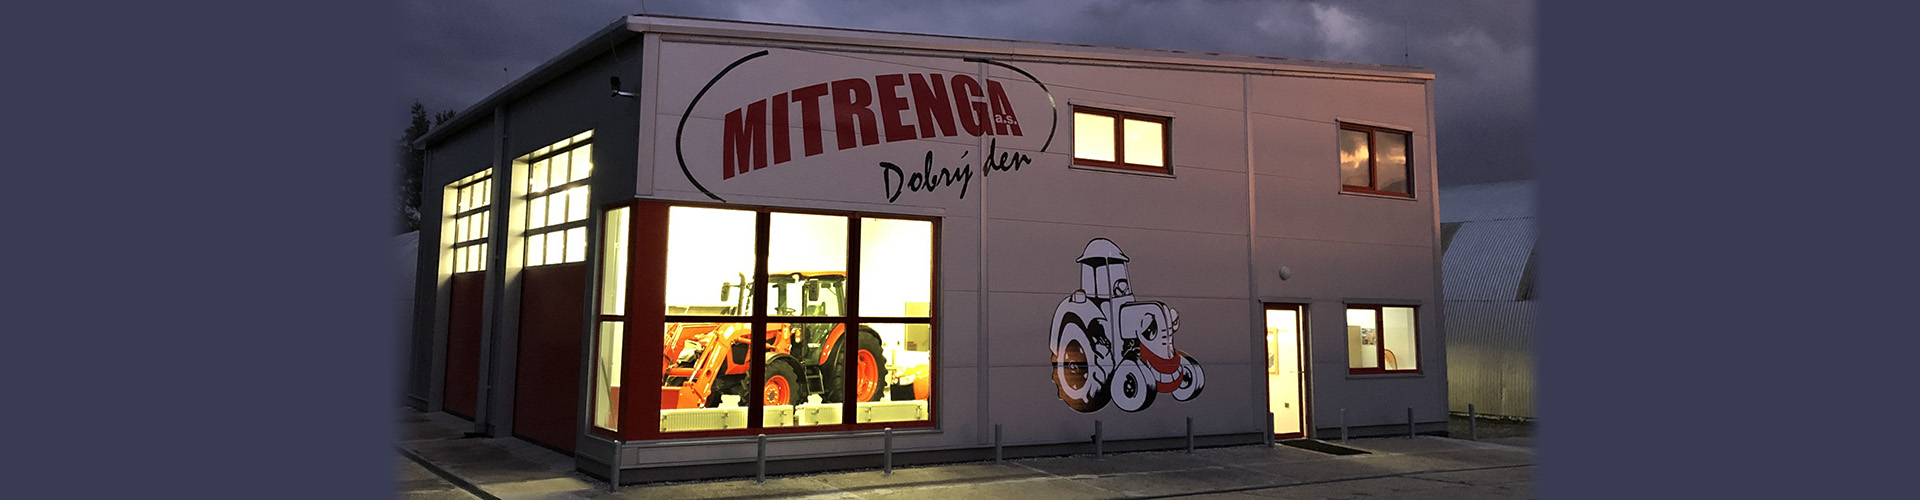 Mitrenga - Prodejna